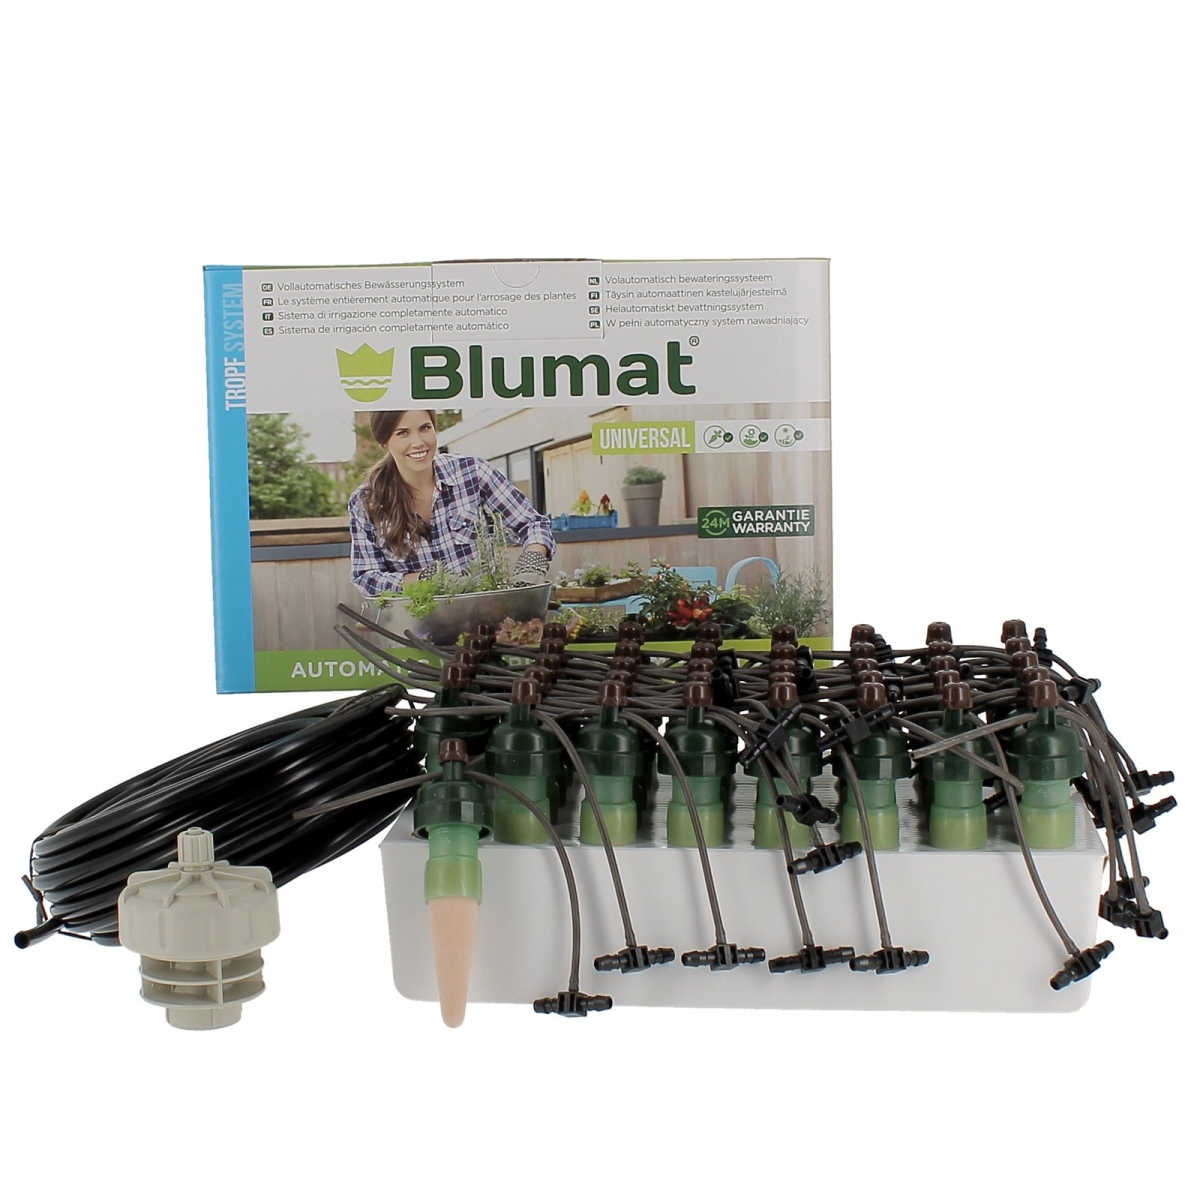 Blumat Tuyau d'Irrigation avec Mini-Jonctions - Bloomling France